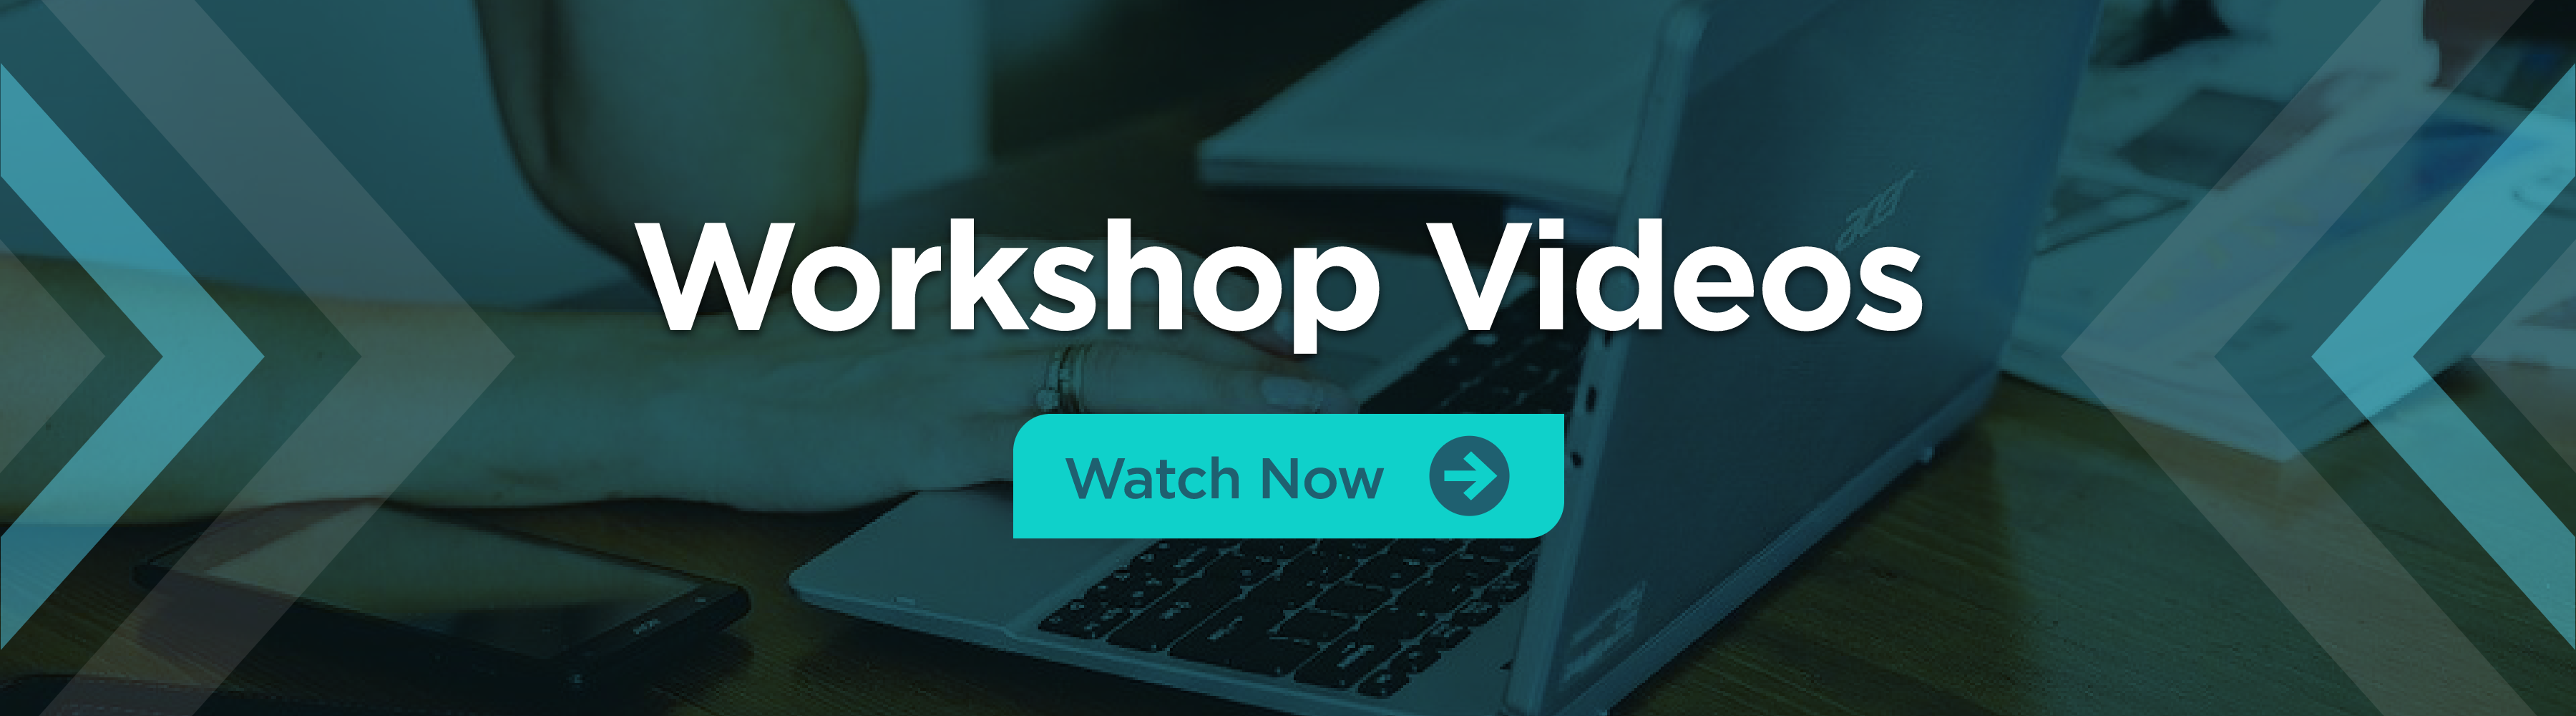 Workshop Videos